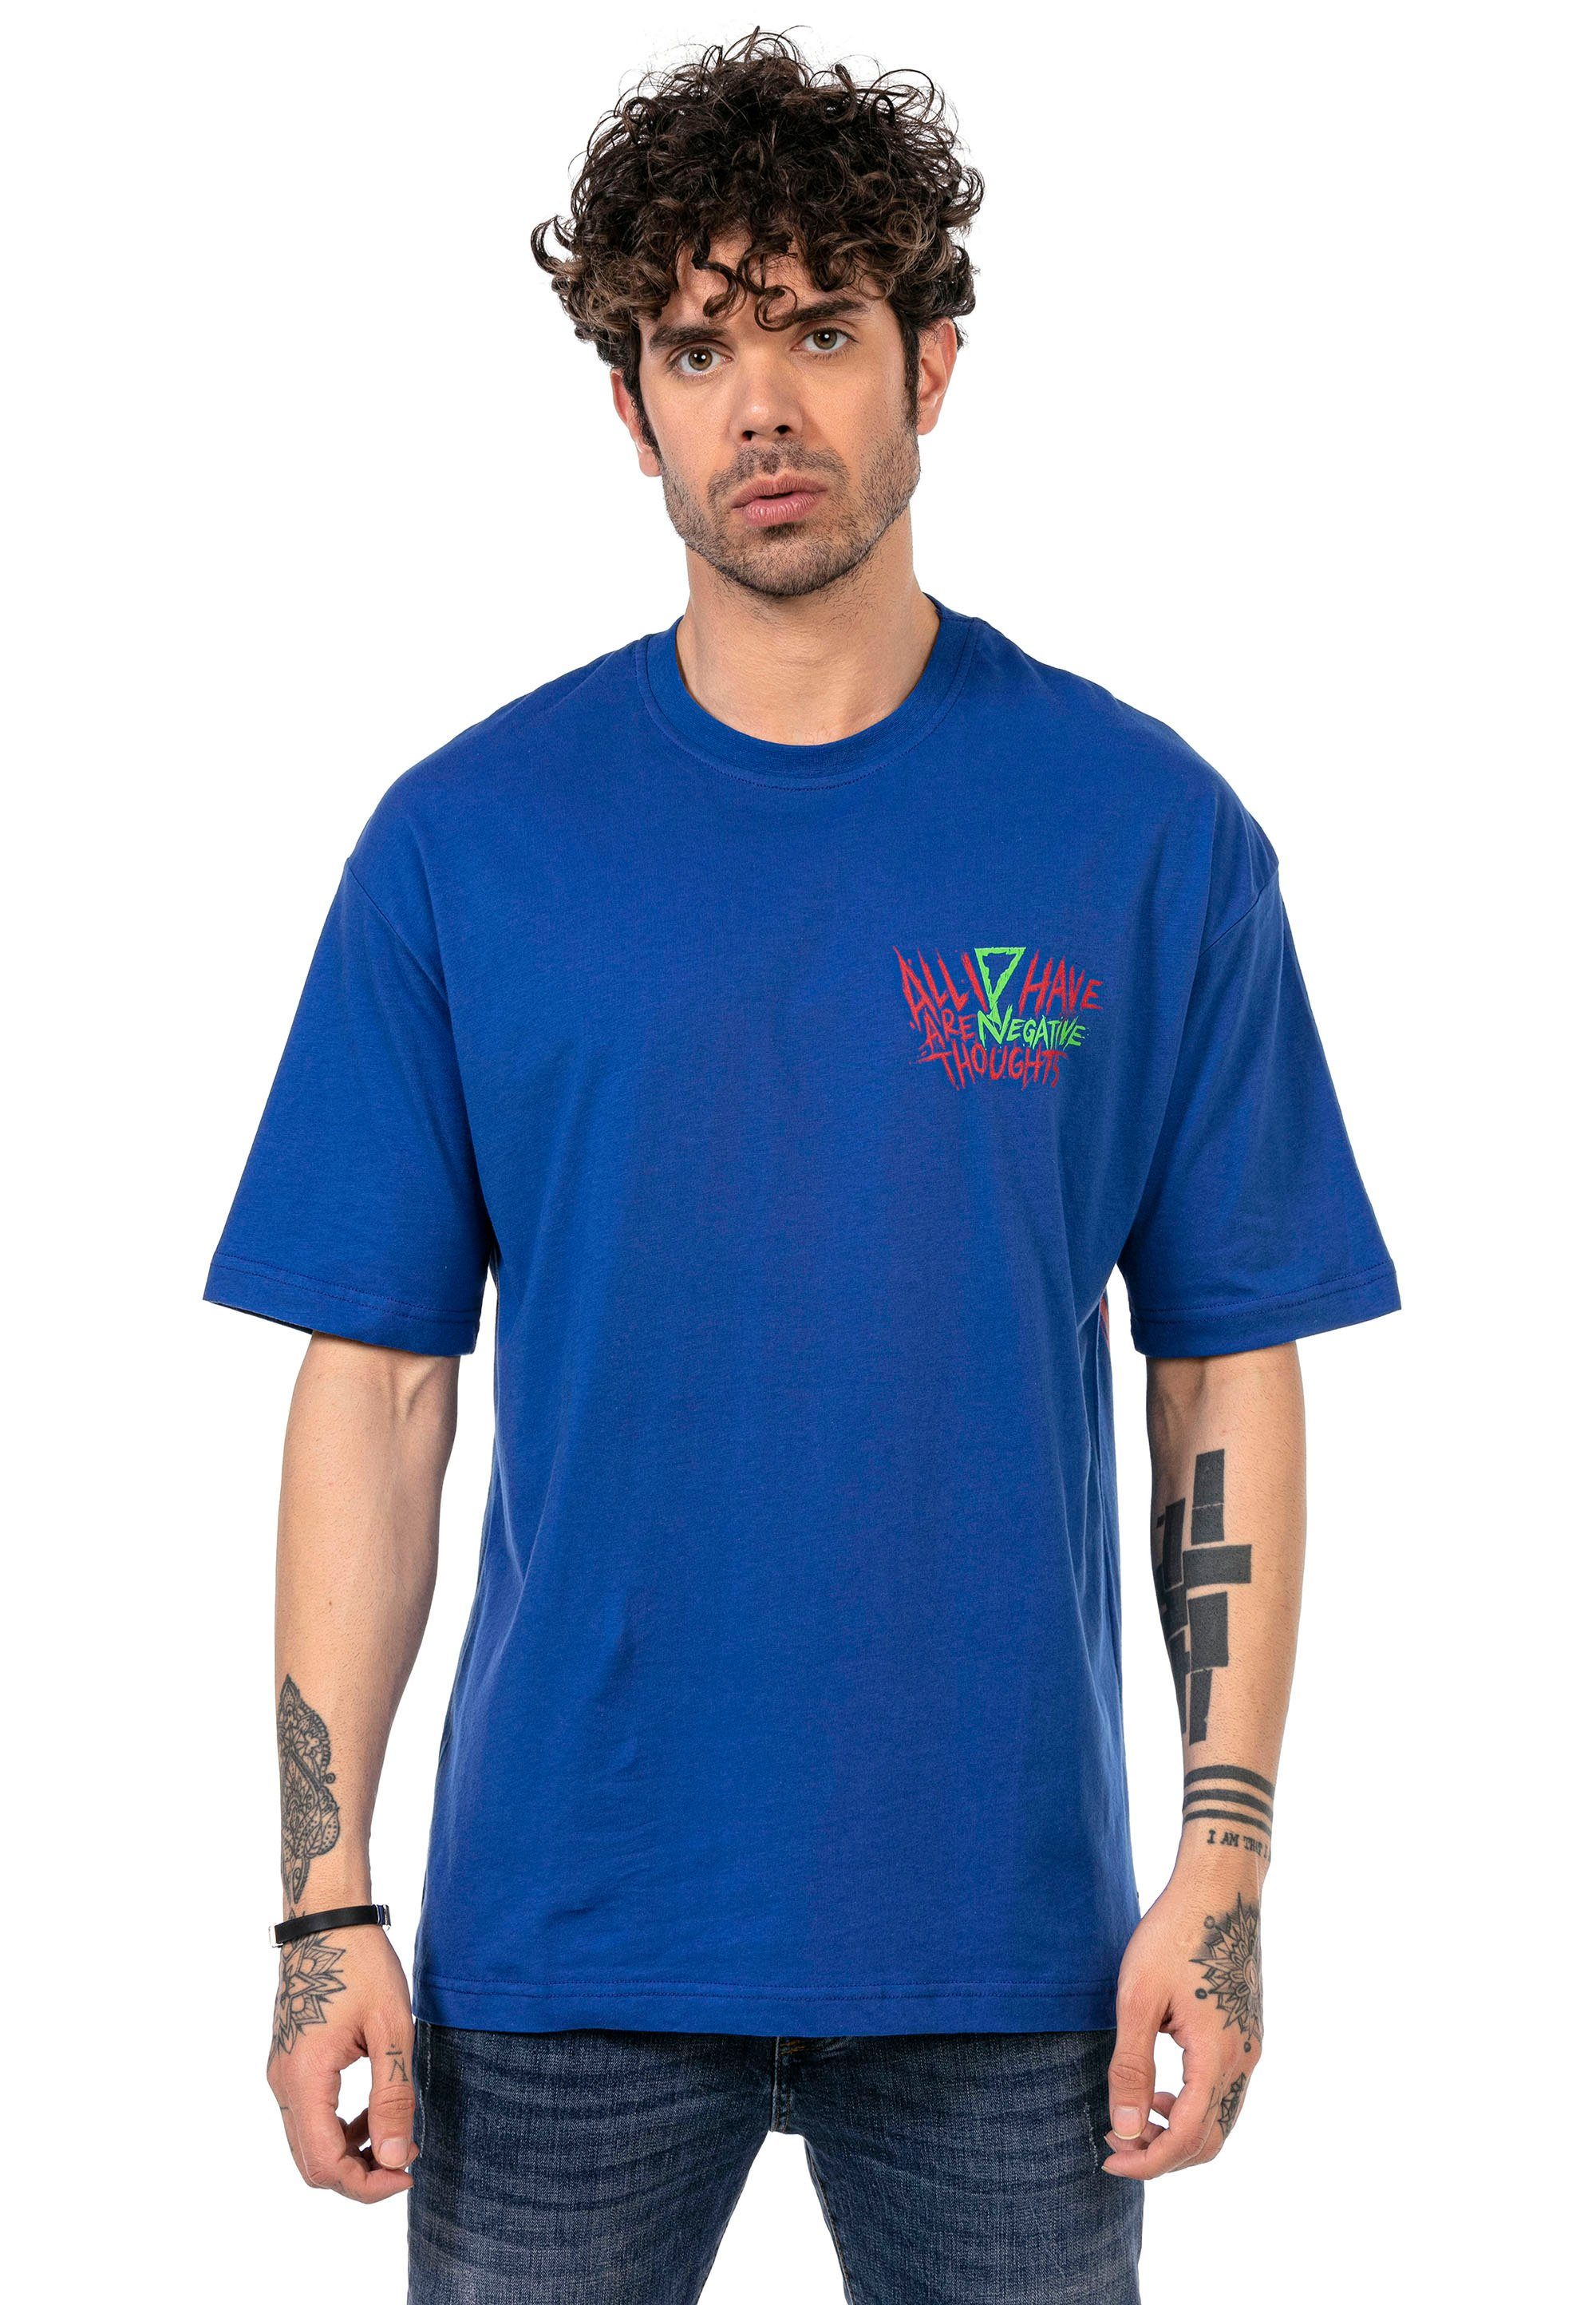 Keynes RedBridge blau mit Joker-Motiv großem Milton T-Shirt